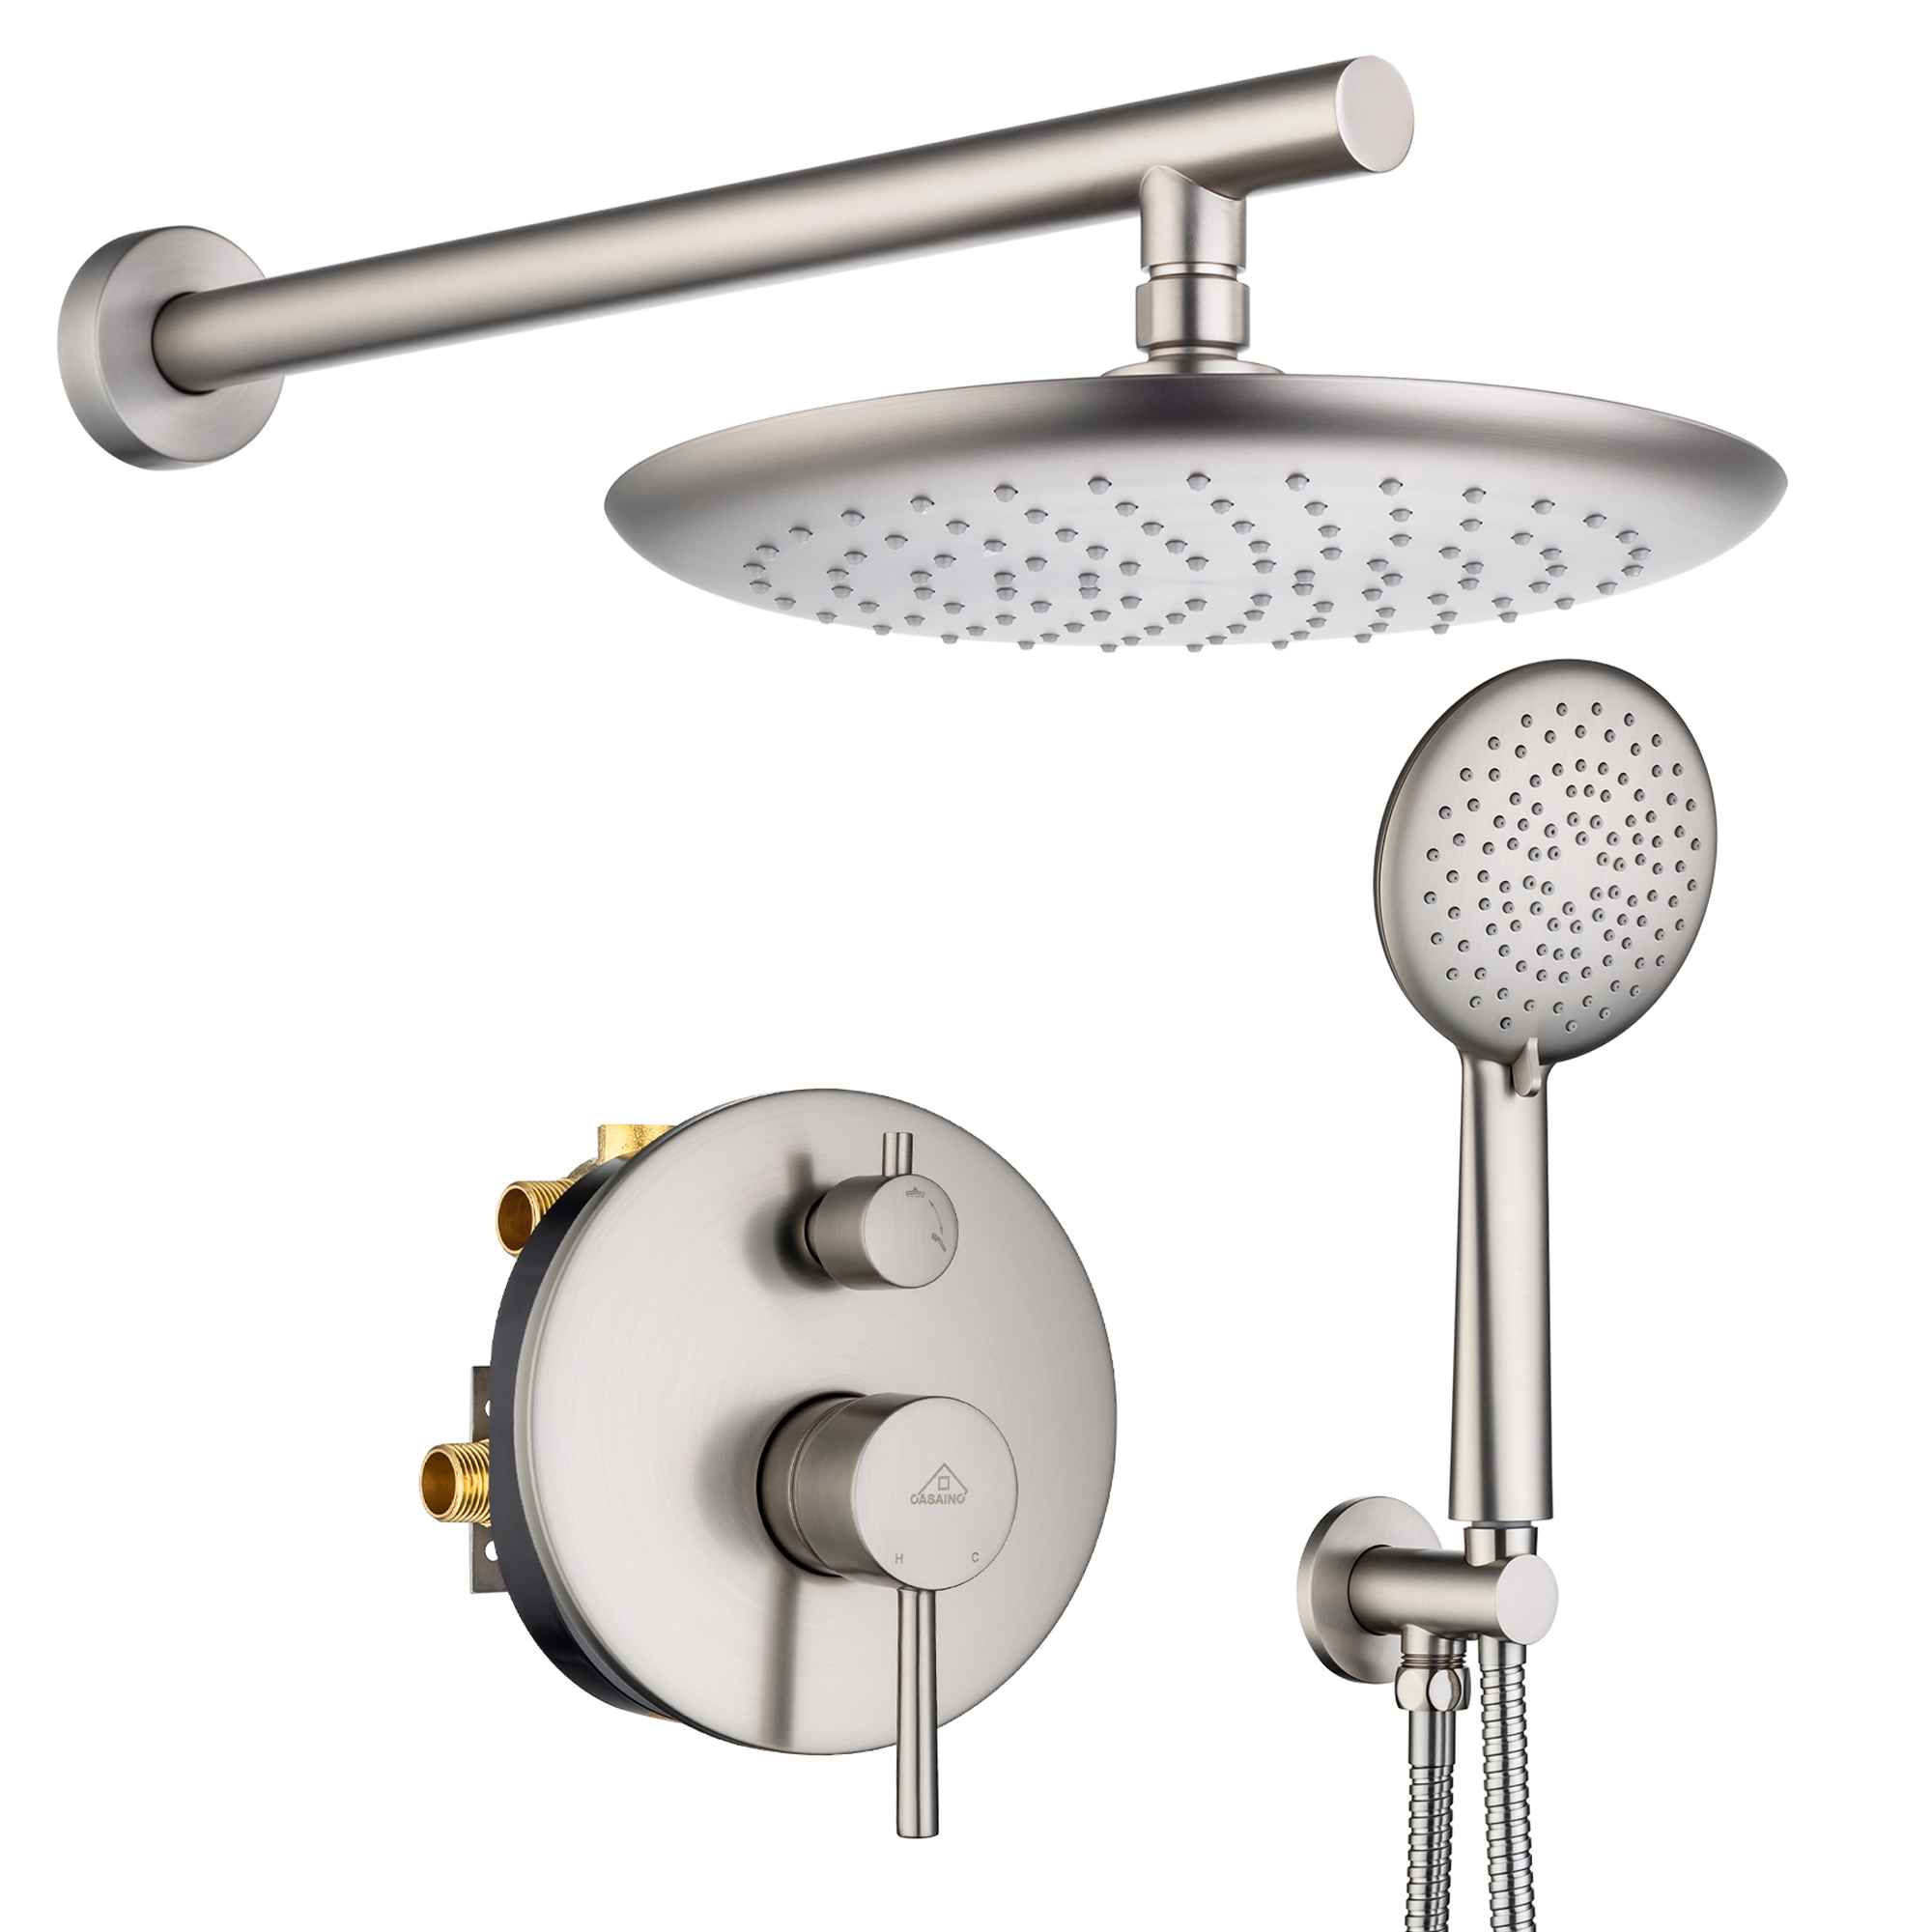 Wall-mounted rain shower faucet with pressure balanced valve-CASAINC